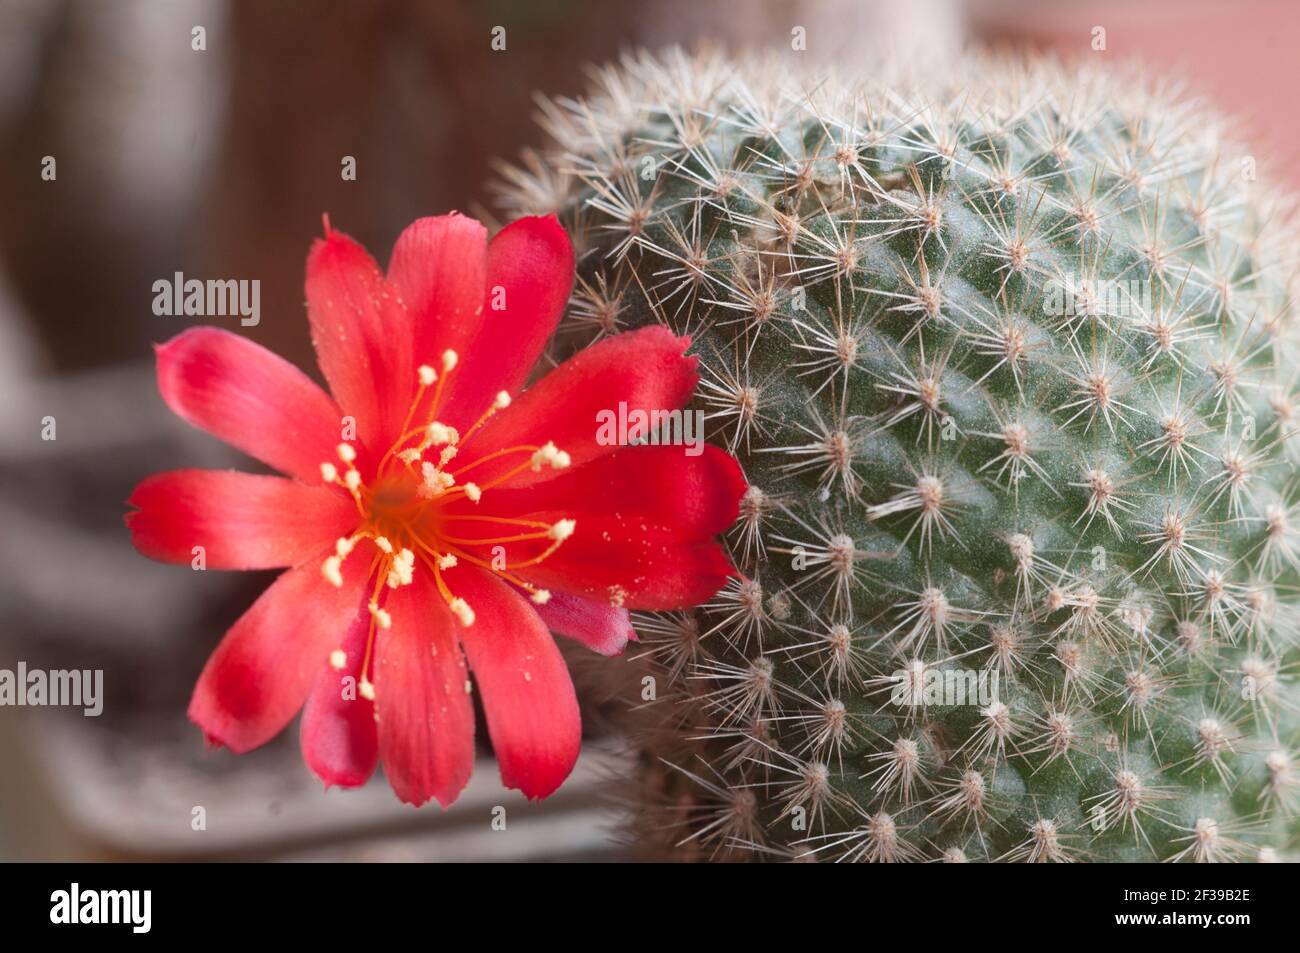 Rebutia minuscula cactus flower, close up shot, local focus Stock Photo